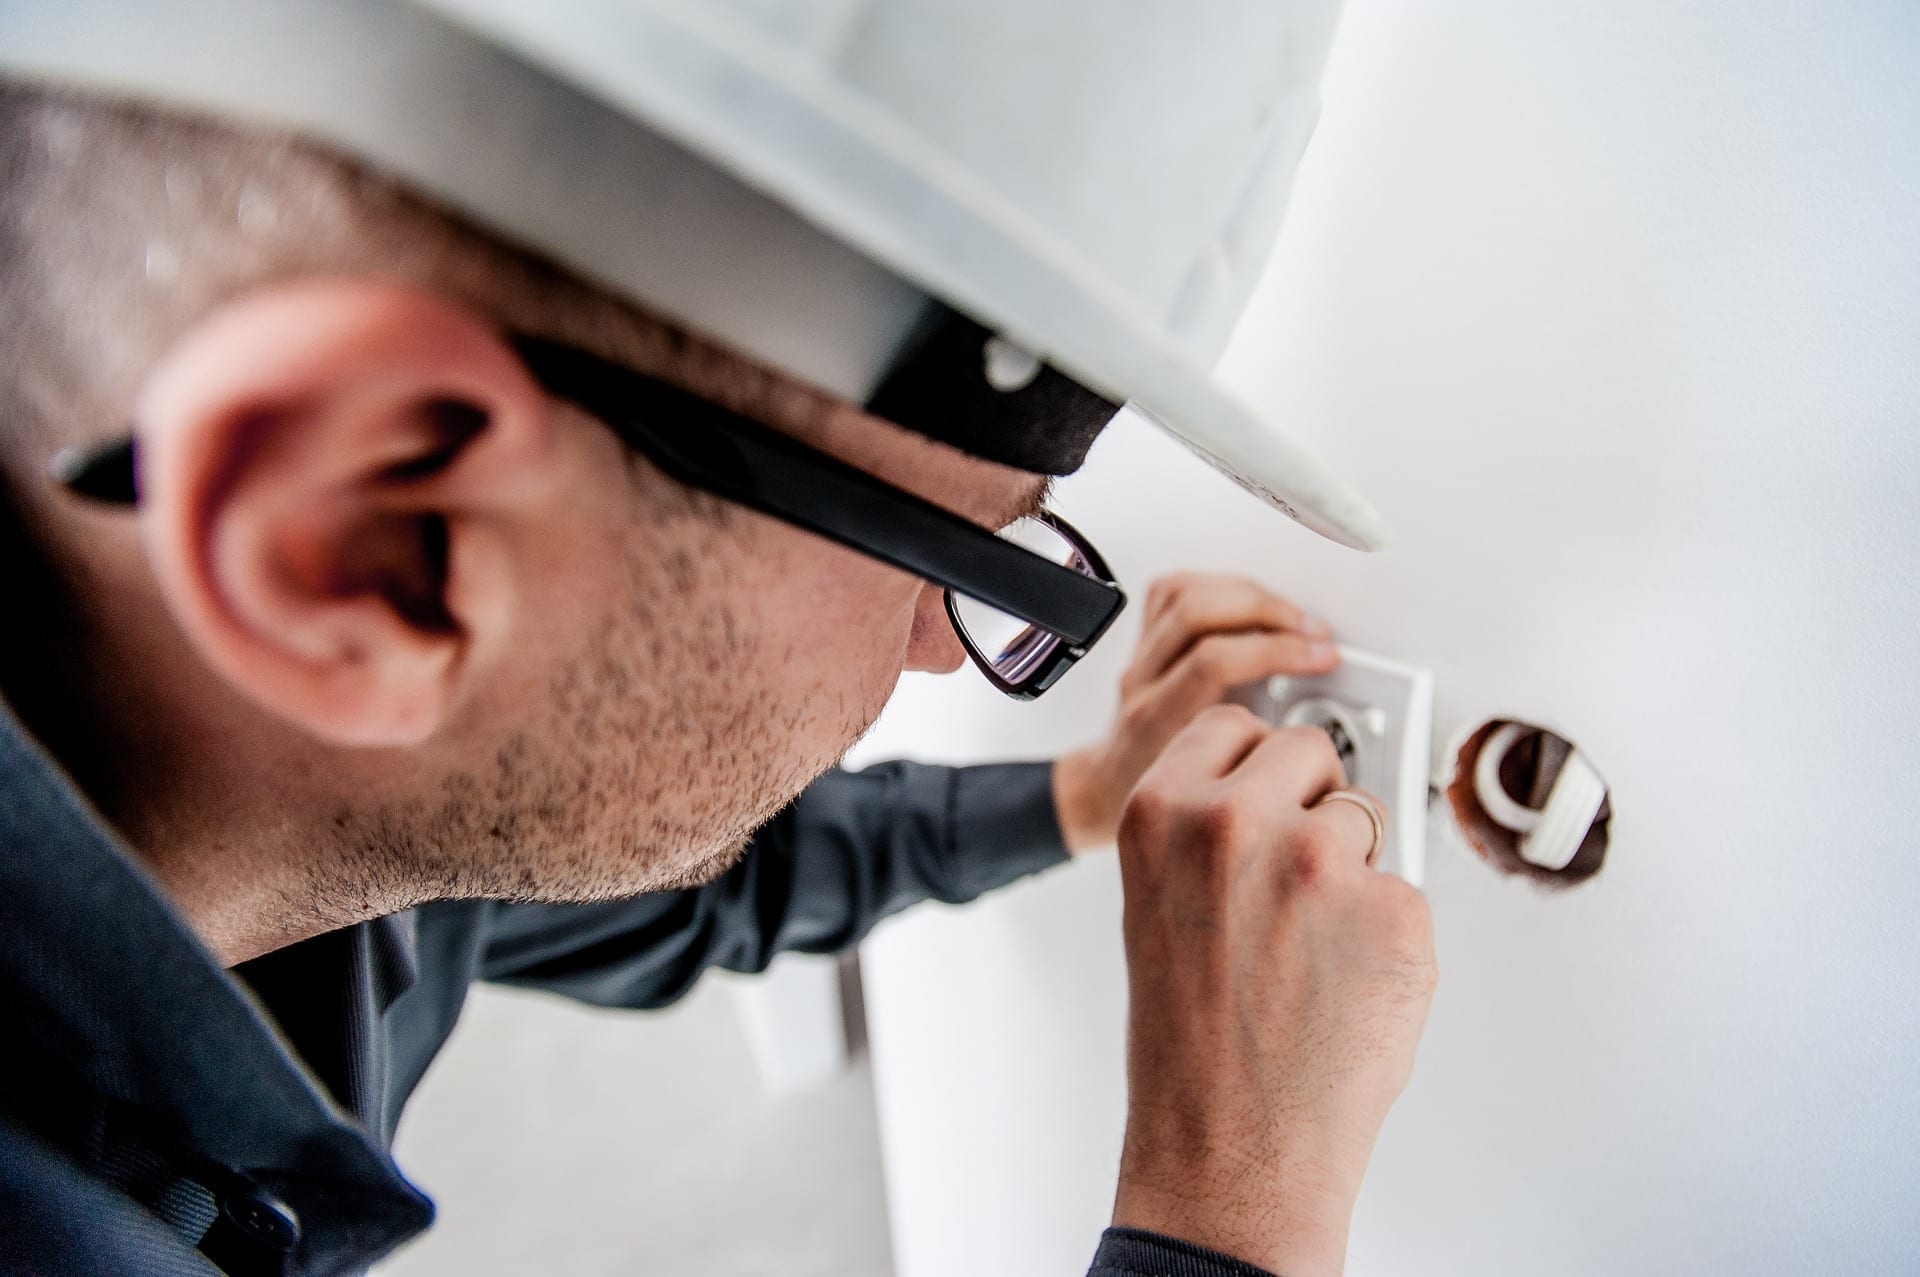 Electrician installing wall socket in a residential home | Electrician Insurance | Hettler Insurance Agency, Lubbock Texas